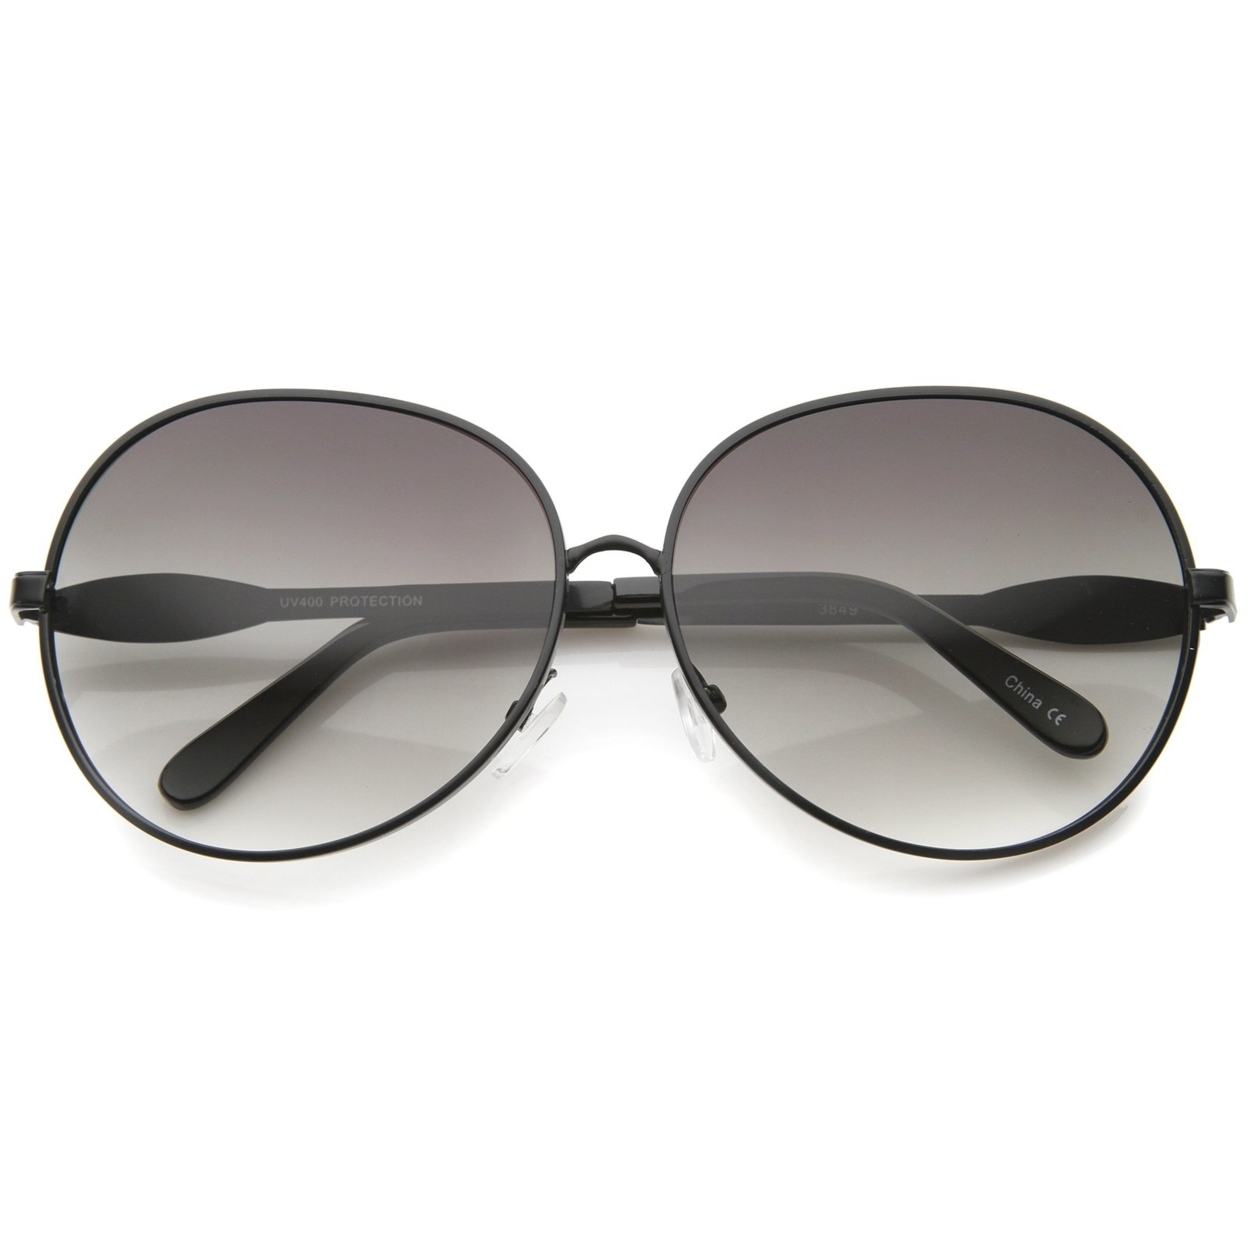 Womens Glam Full Metal Frame Oversized Round Sunglasses 63mm - Gold / Green